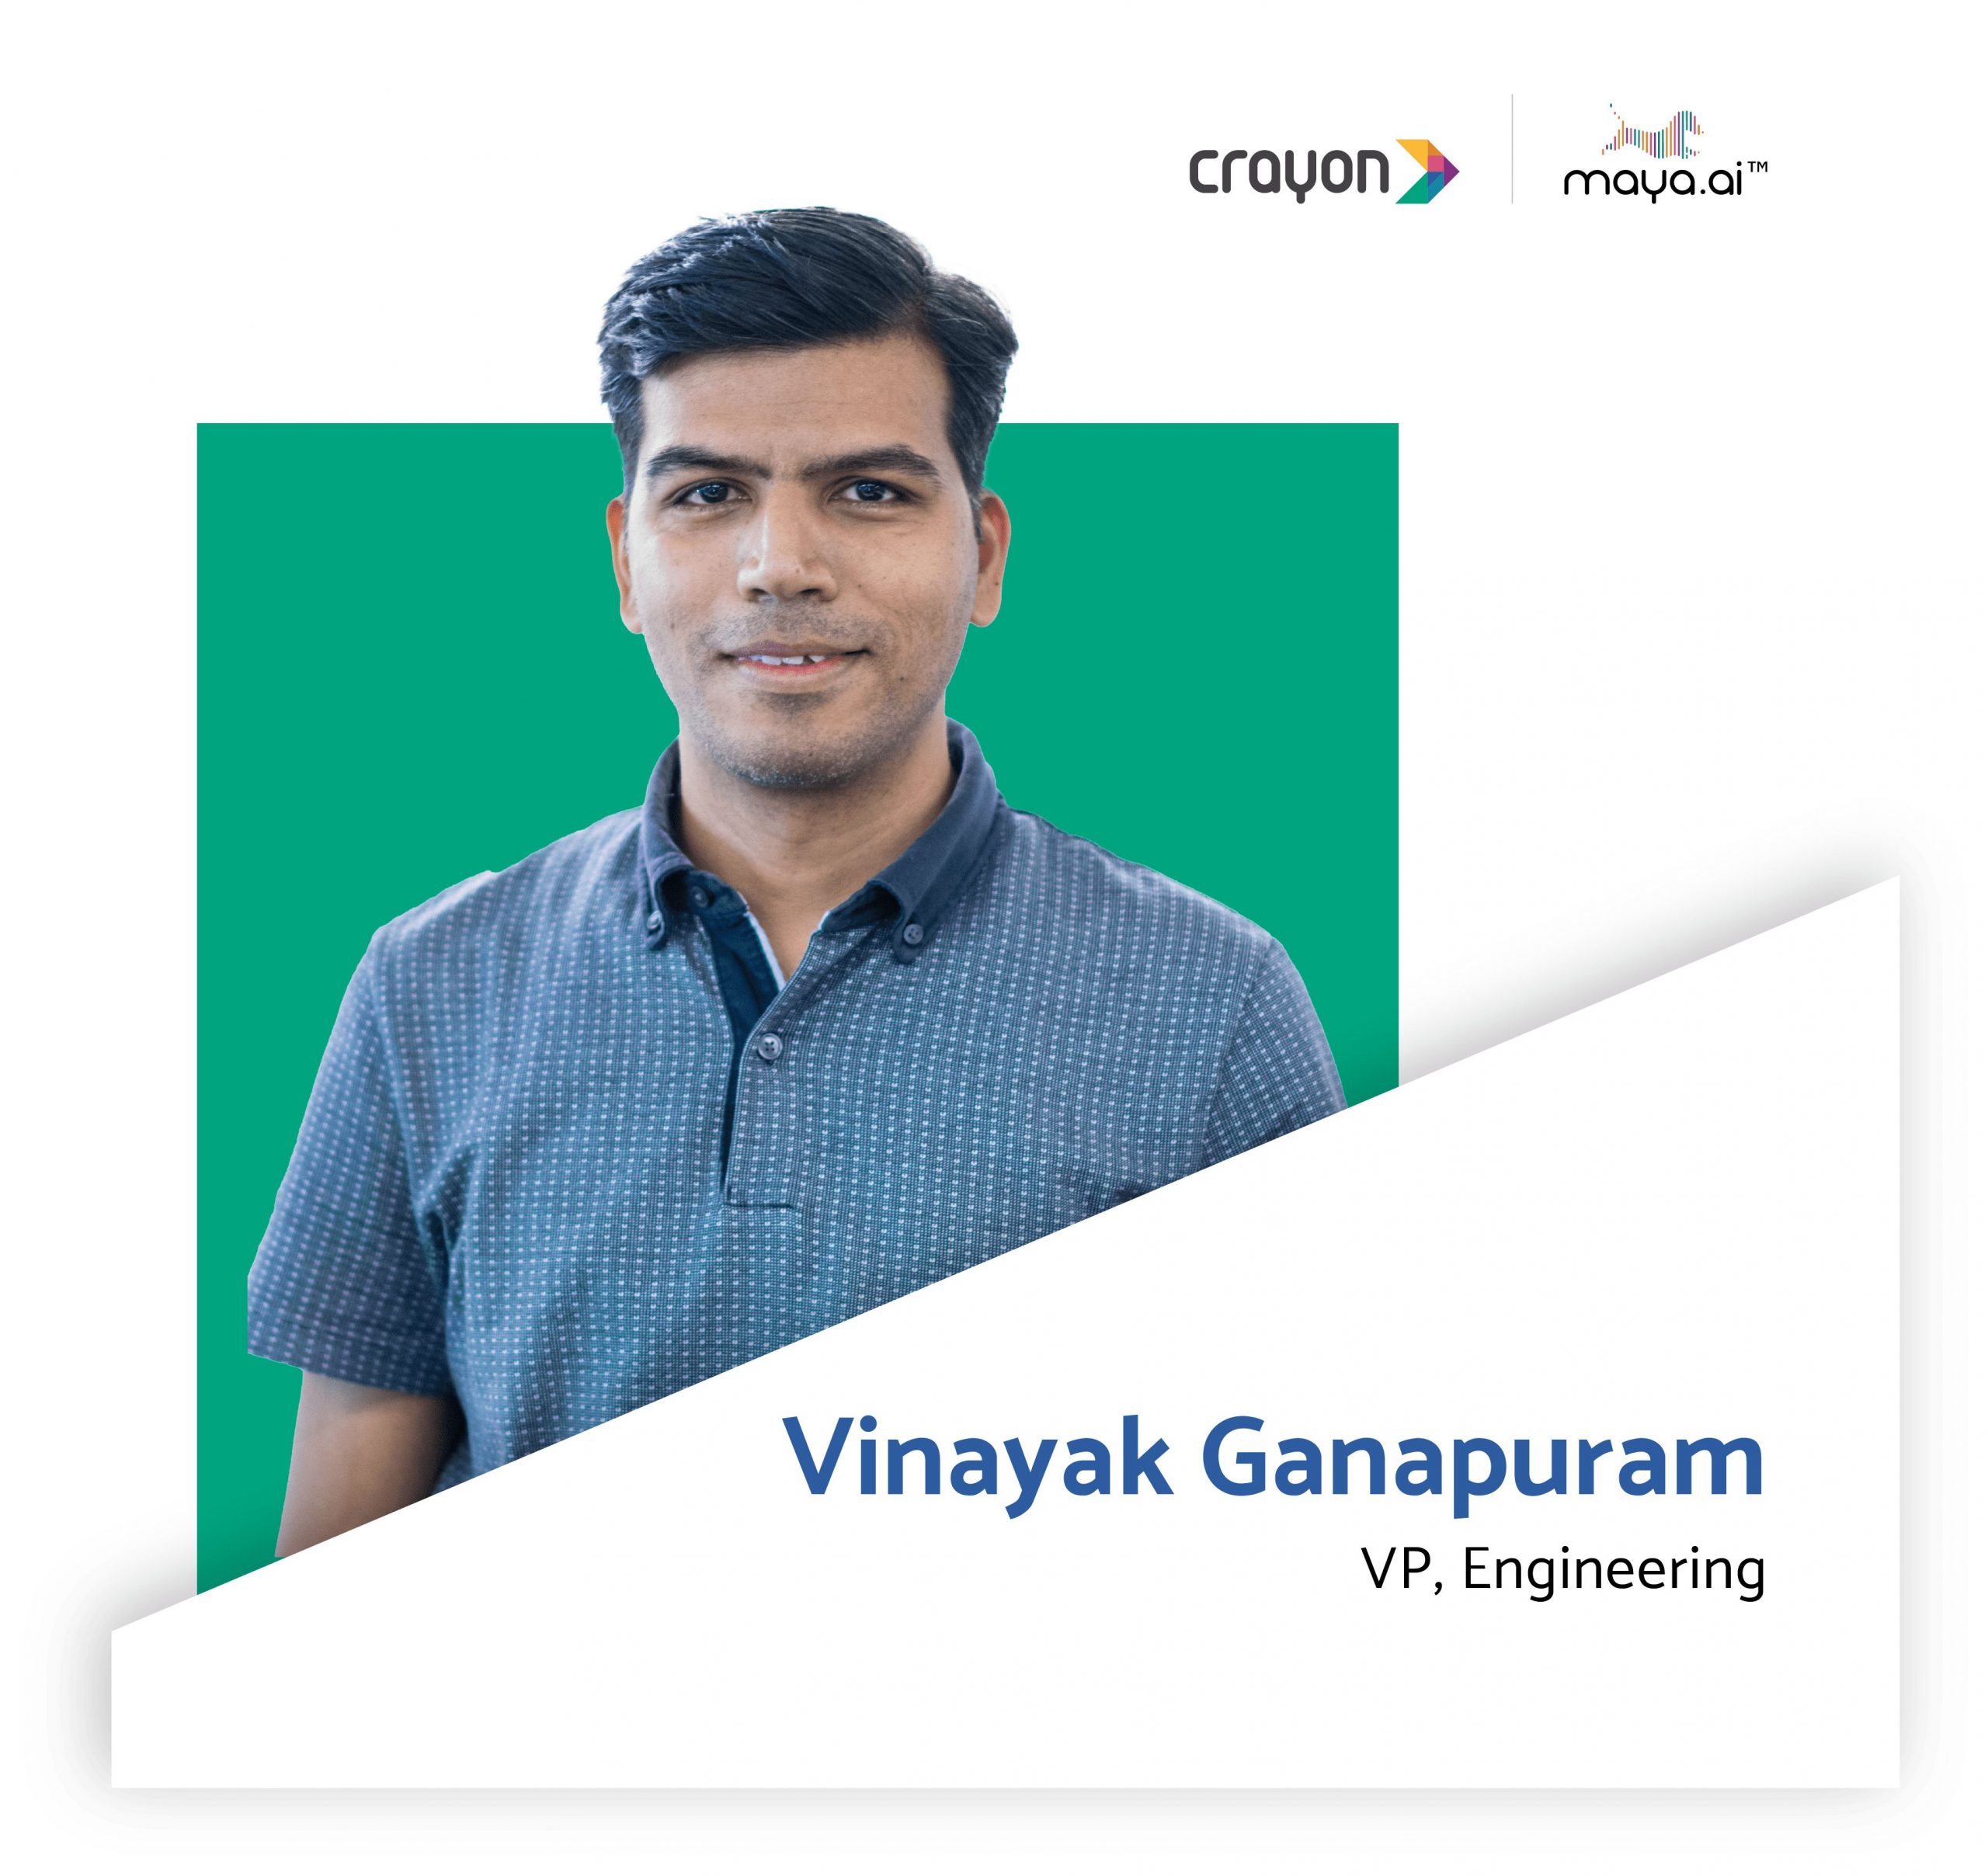 Vinayak Ganapuram joins Crayon Data as Vice President, Engineering